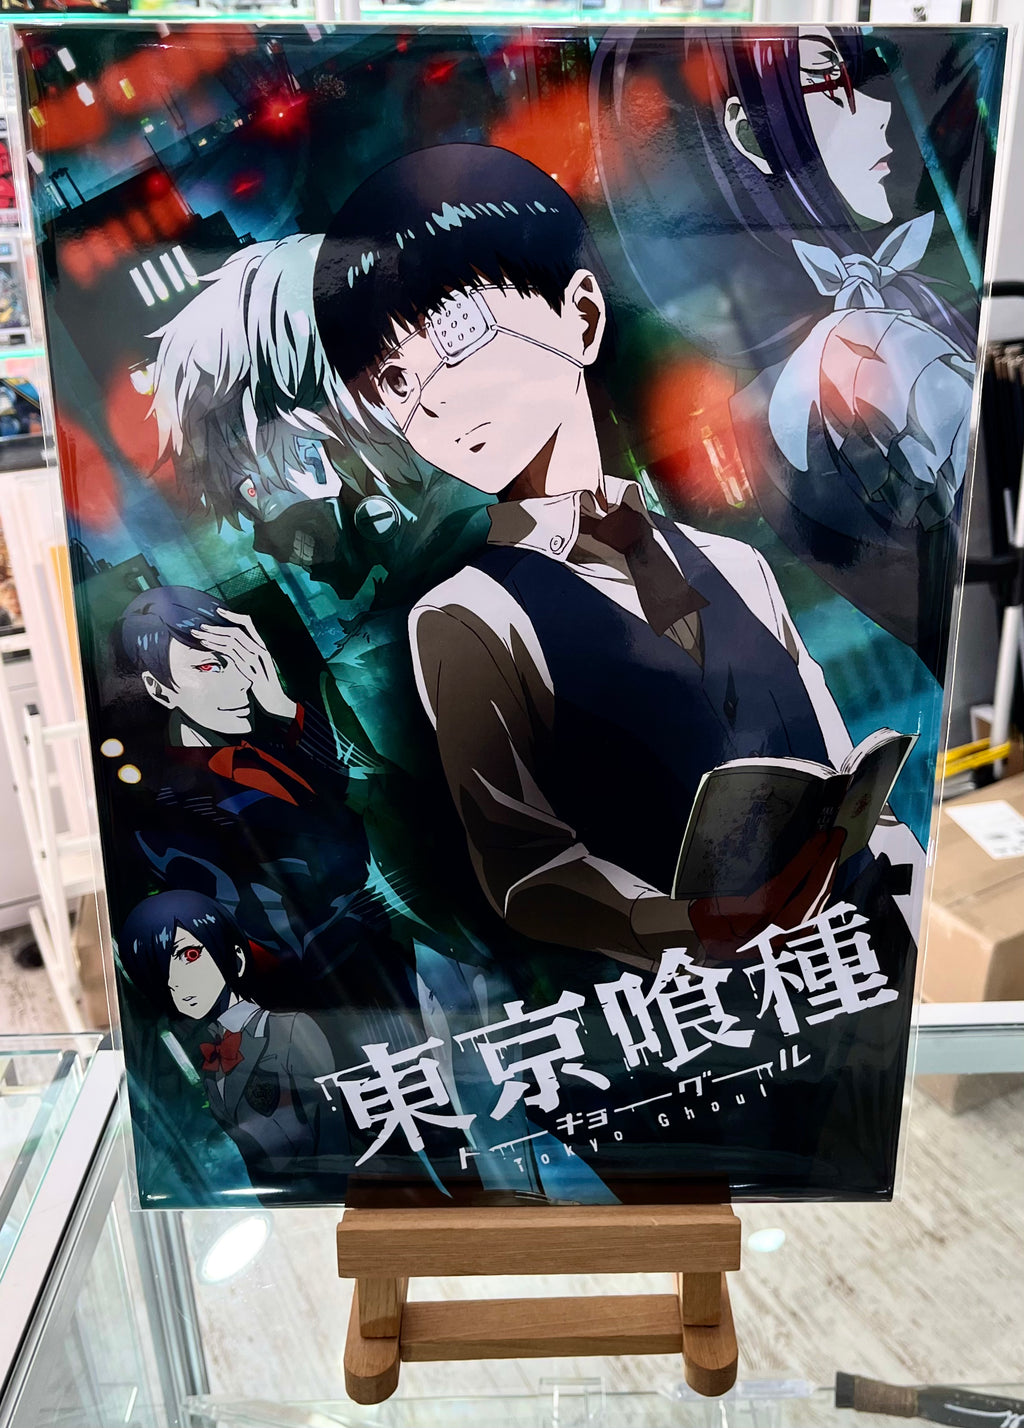 Tokyo Ghoul Manga Art Poster